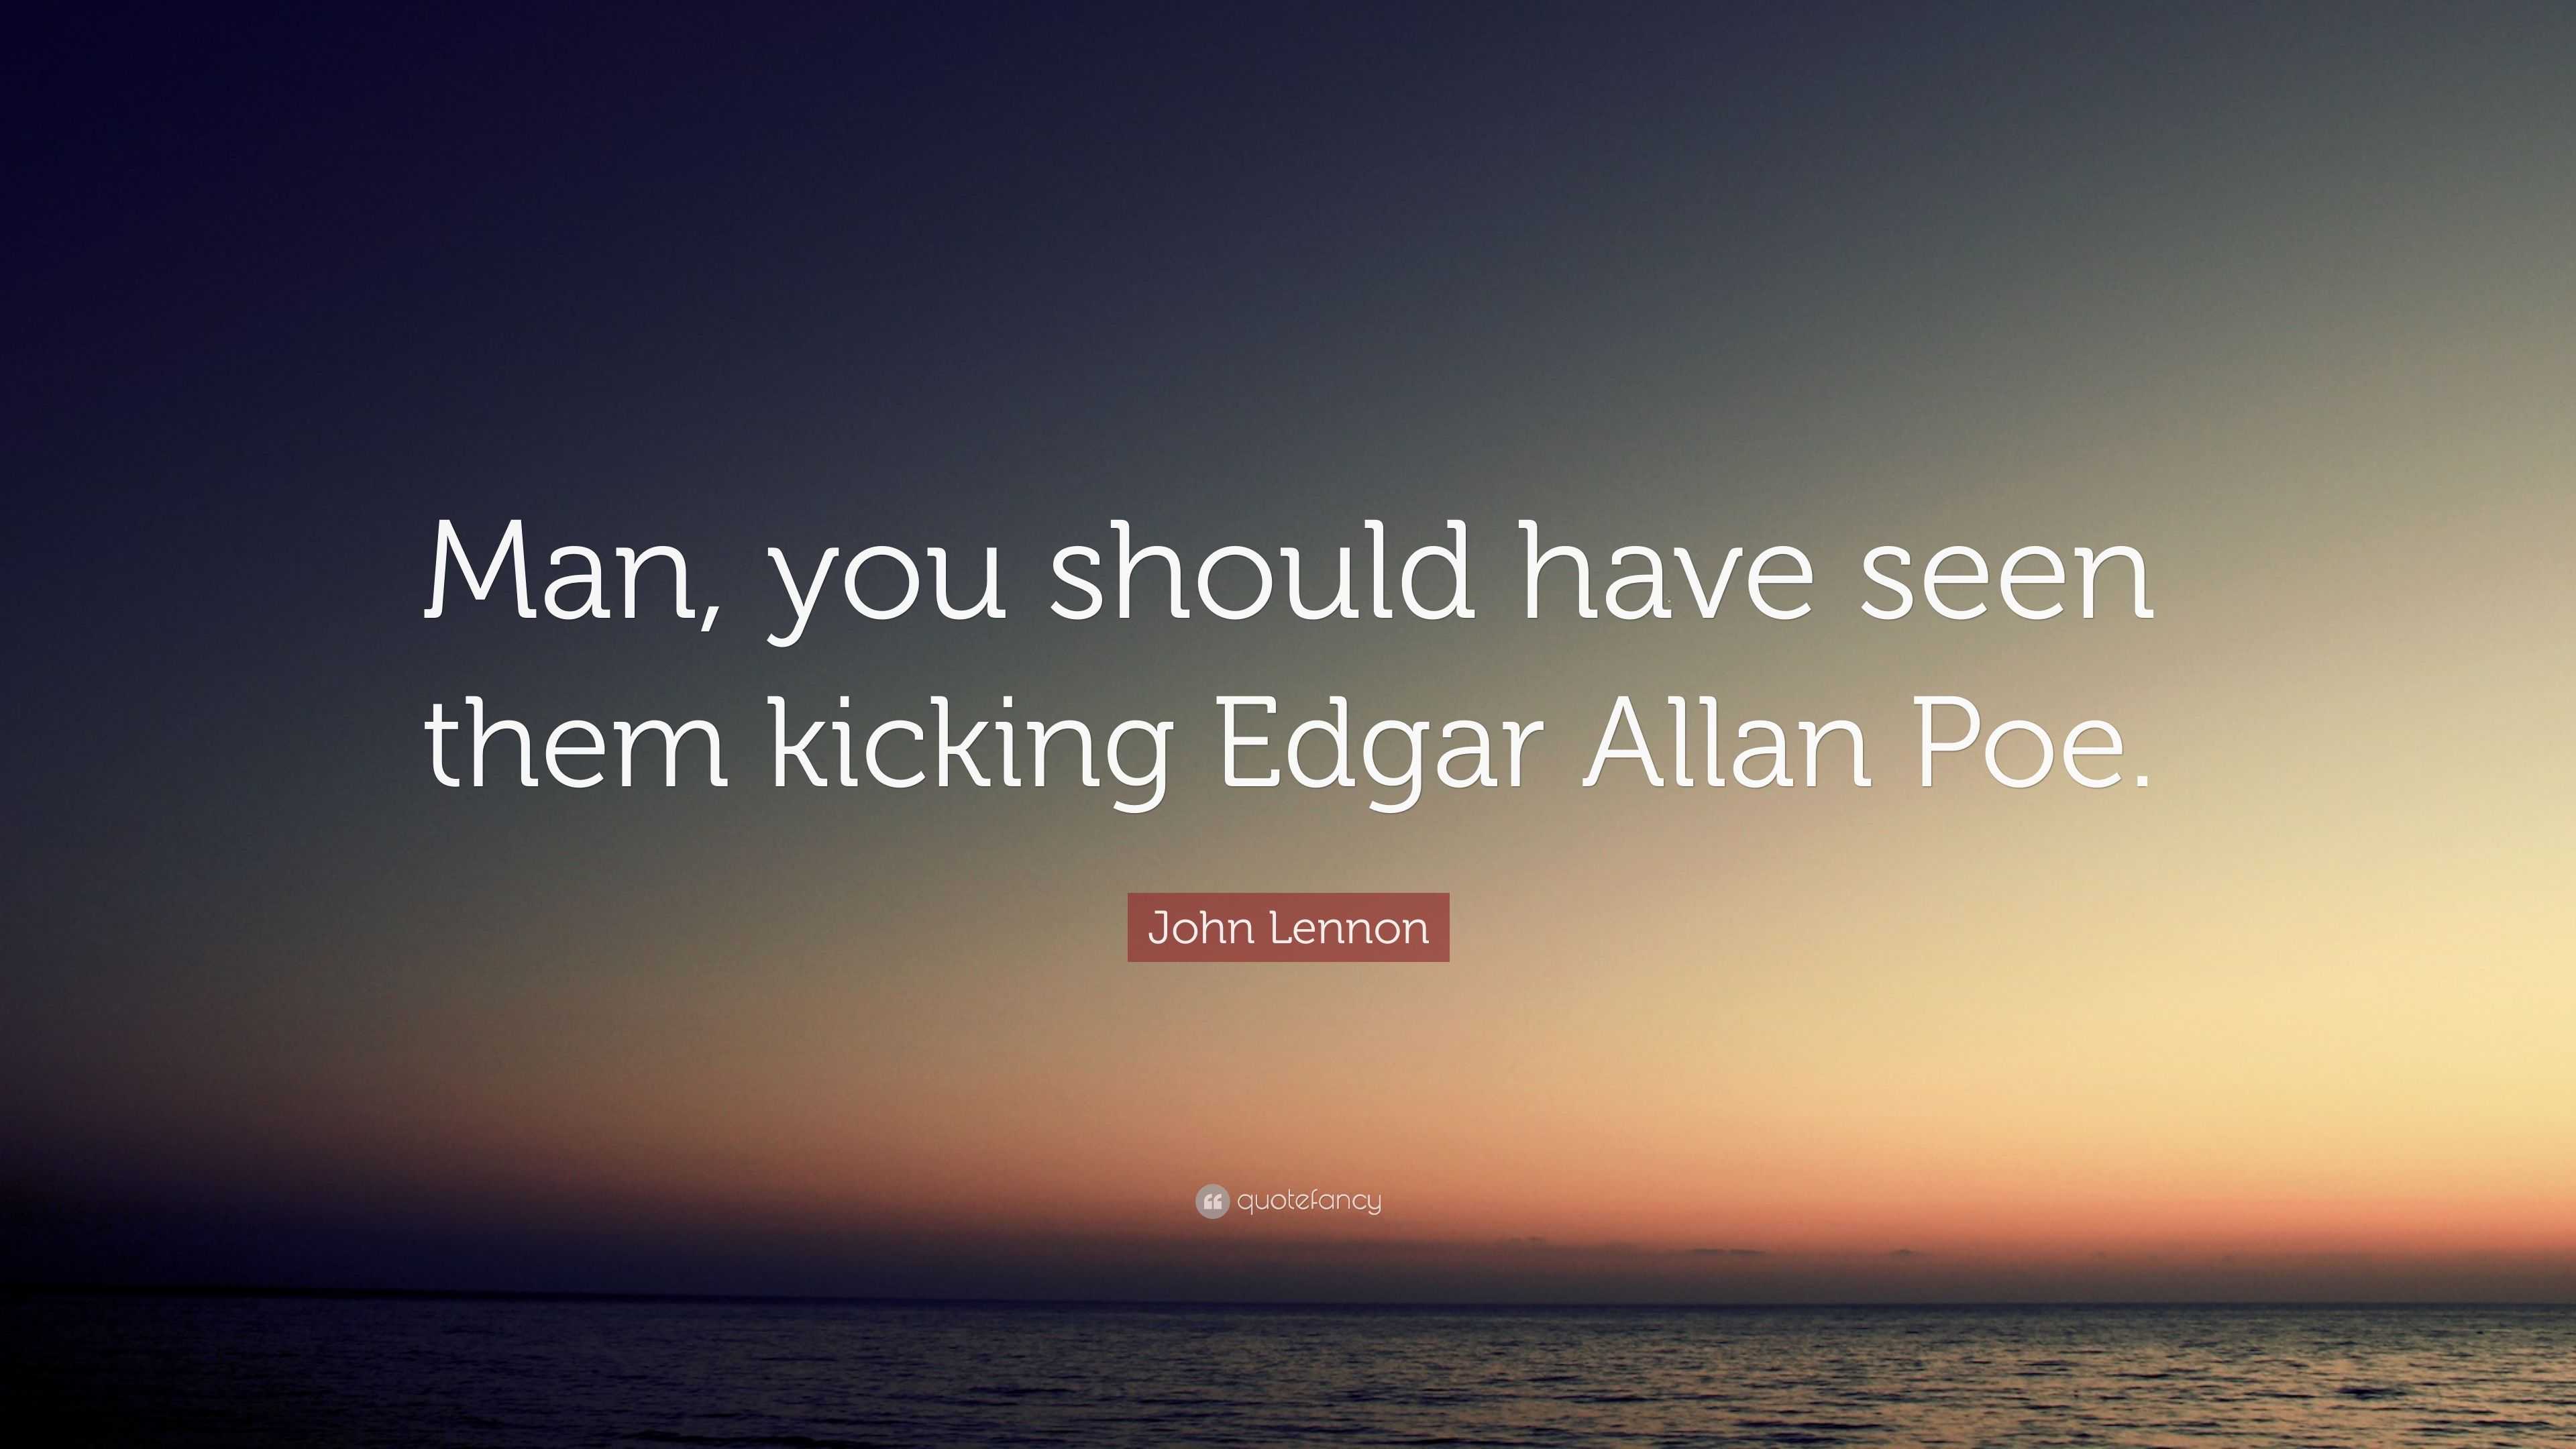 John Lennon Quote: “Man, you should have seen them kicking Edgar Allan ...